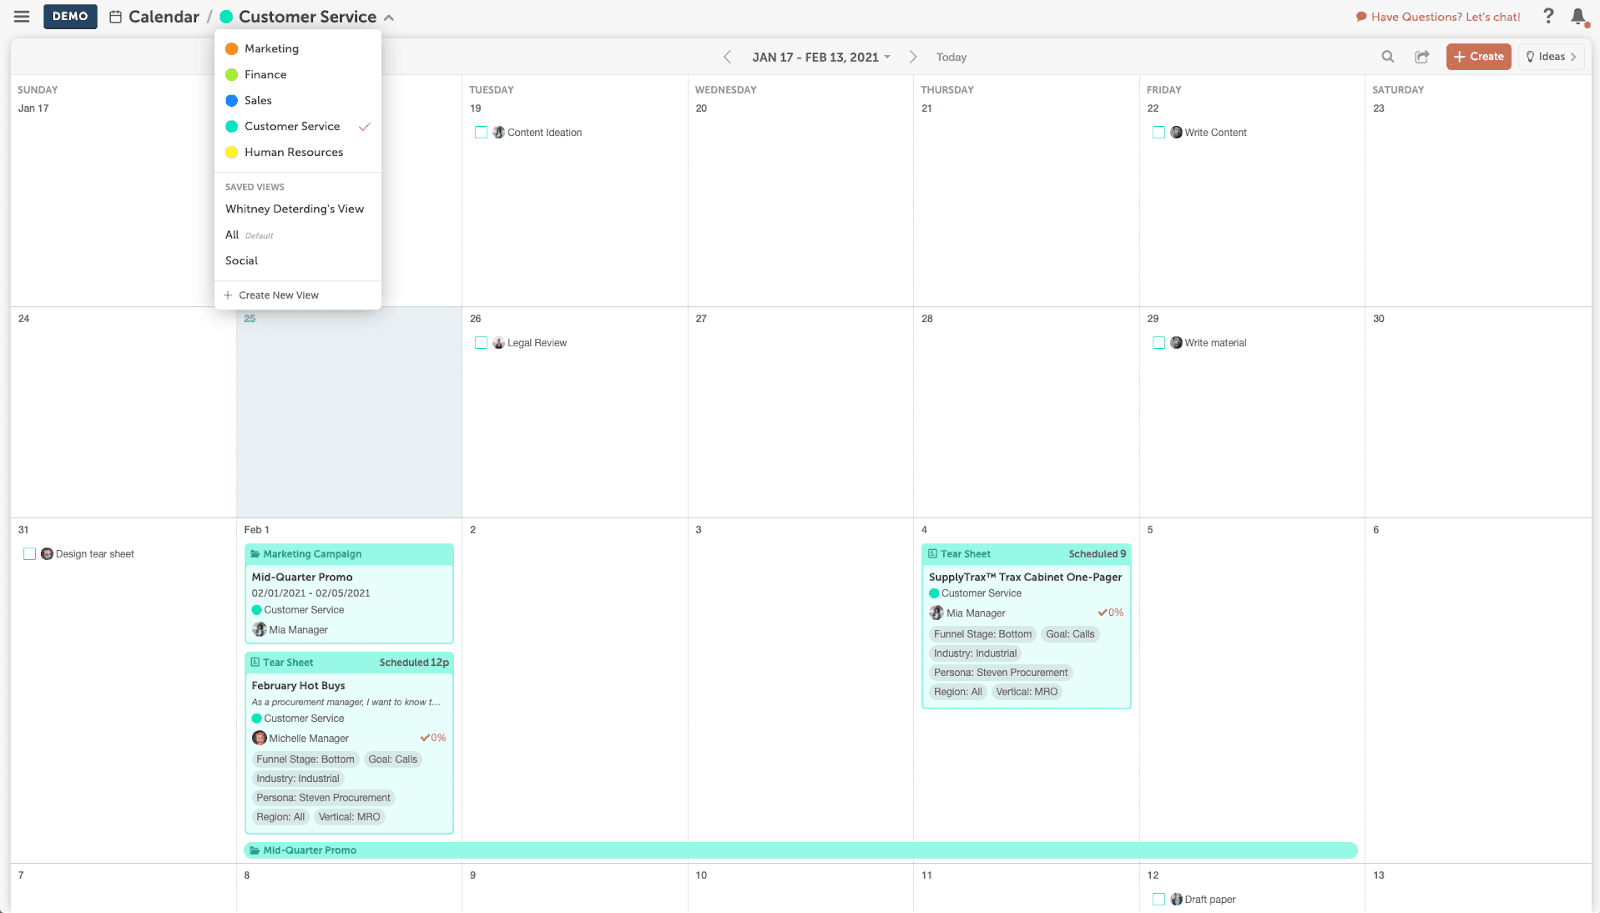 SubCalendar Views Create Calendars With Custom Team Permissions